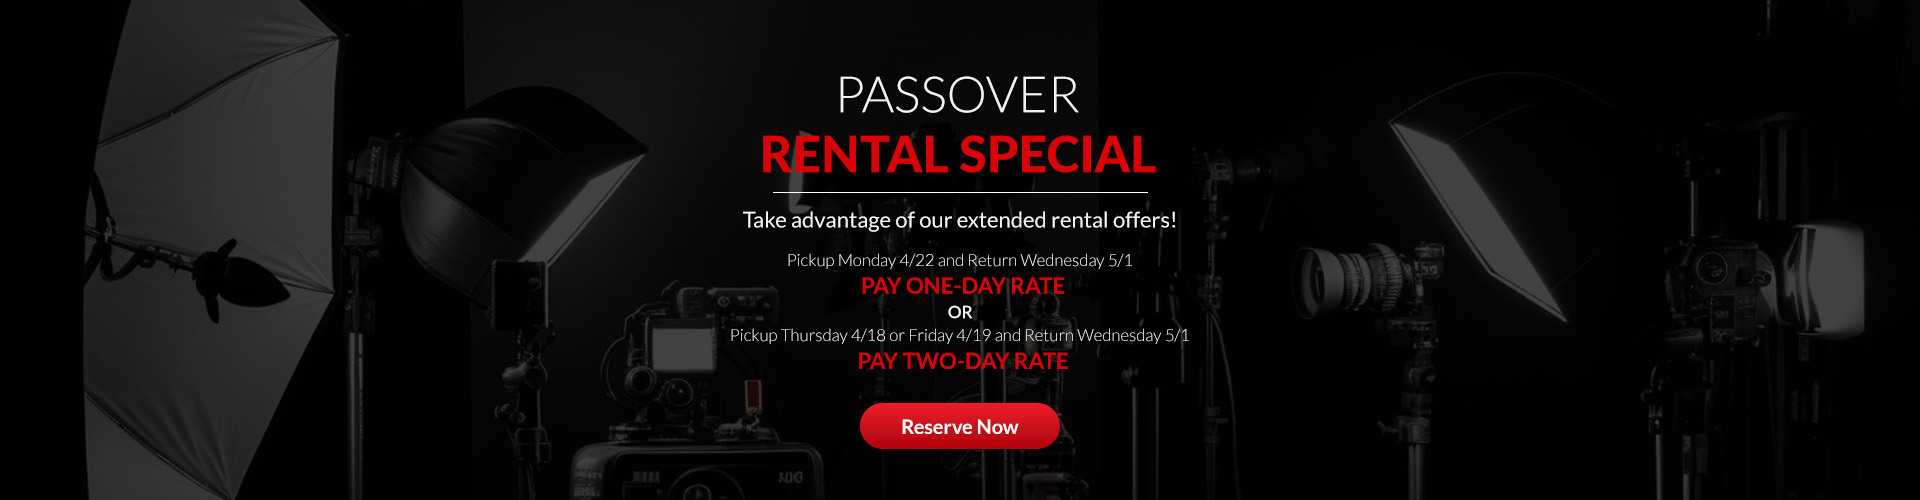 Passover Rental Special